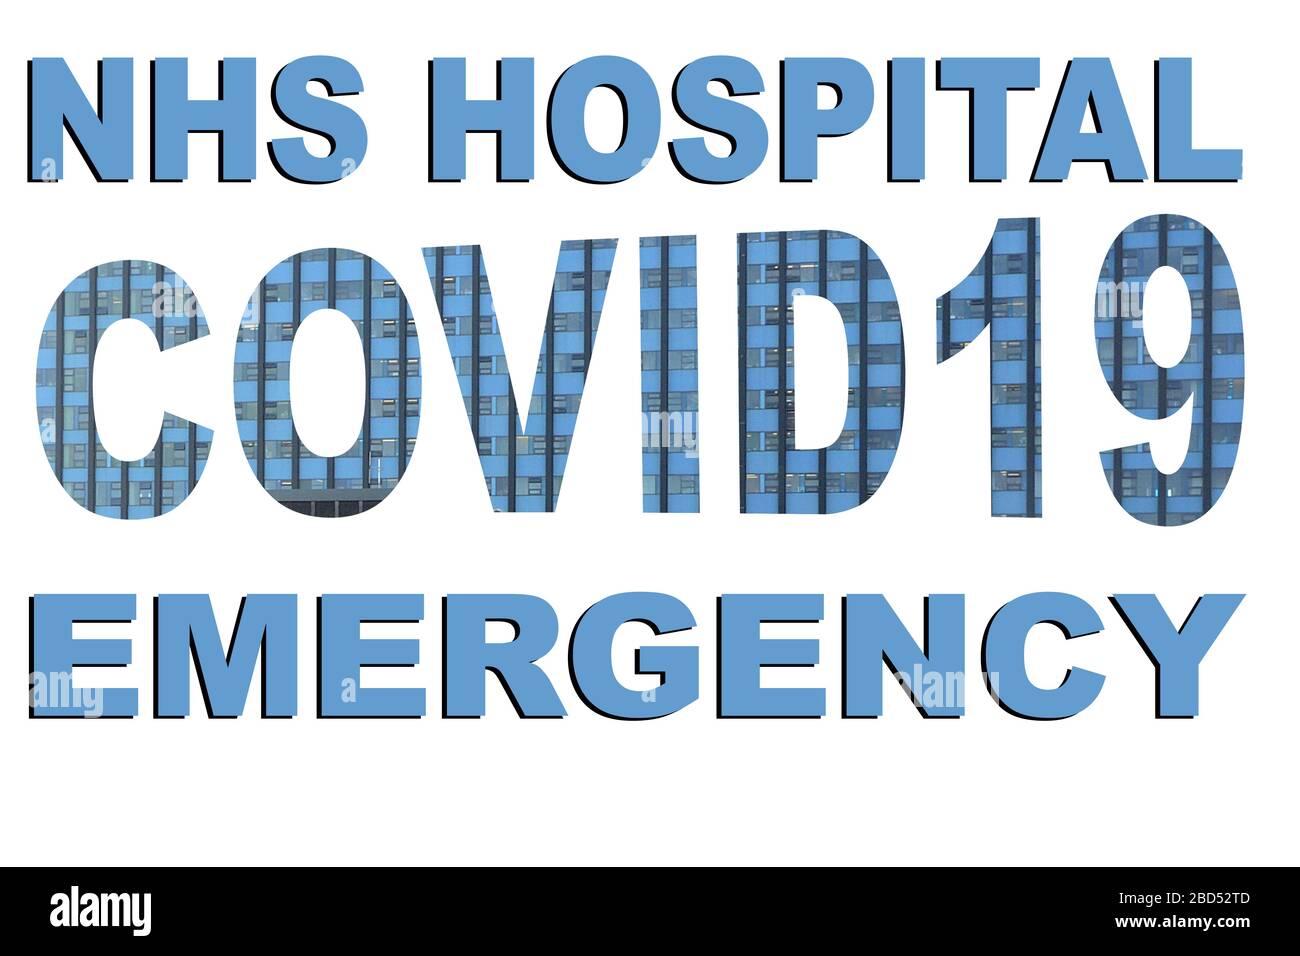 NHS hospital, Hull HRI, Covid19 Stock Photo